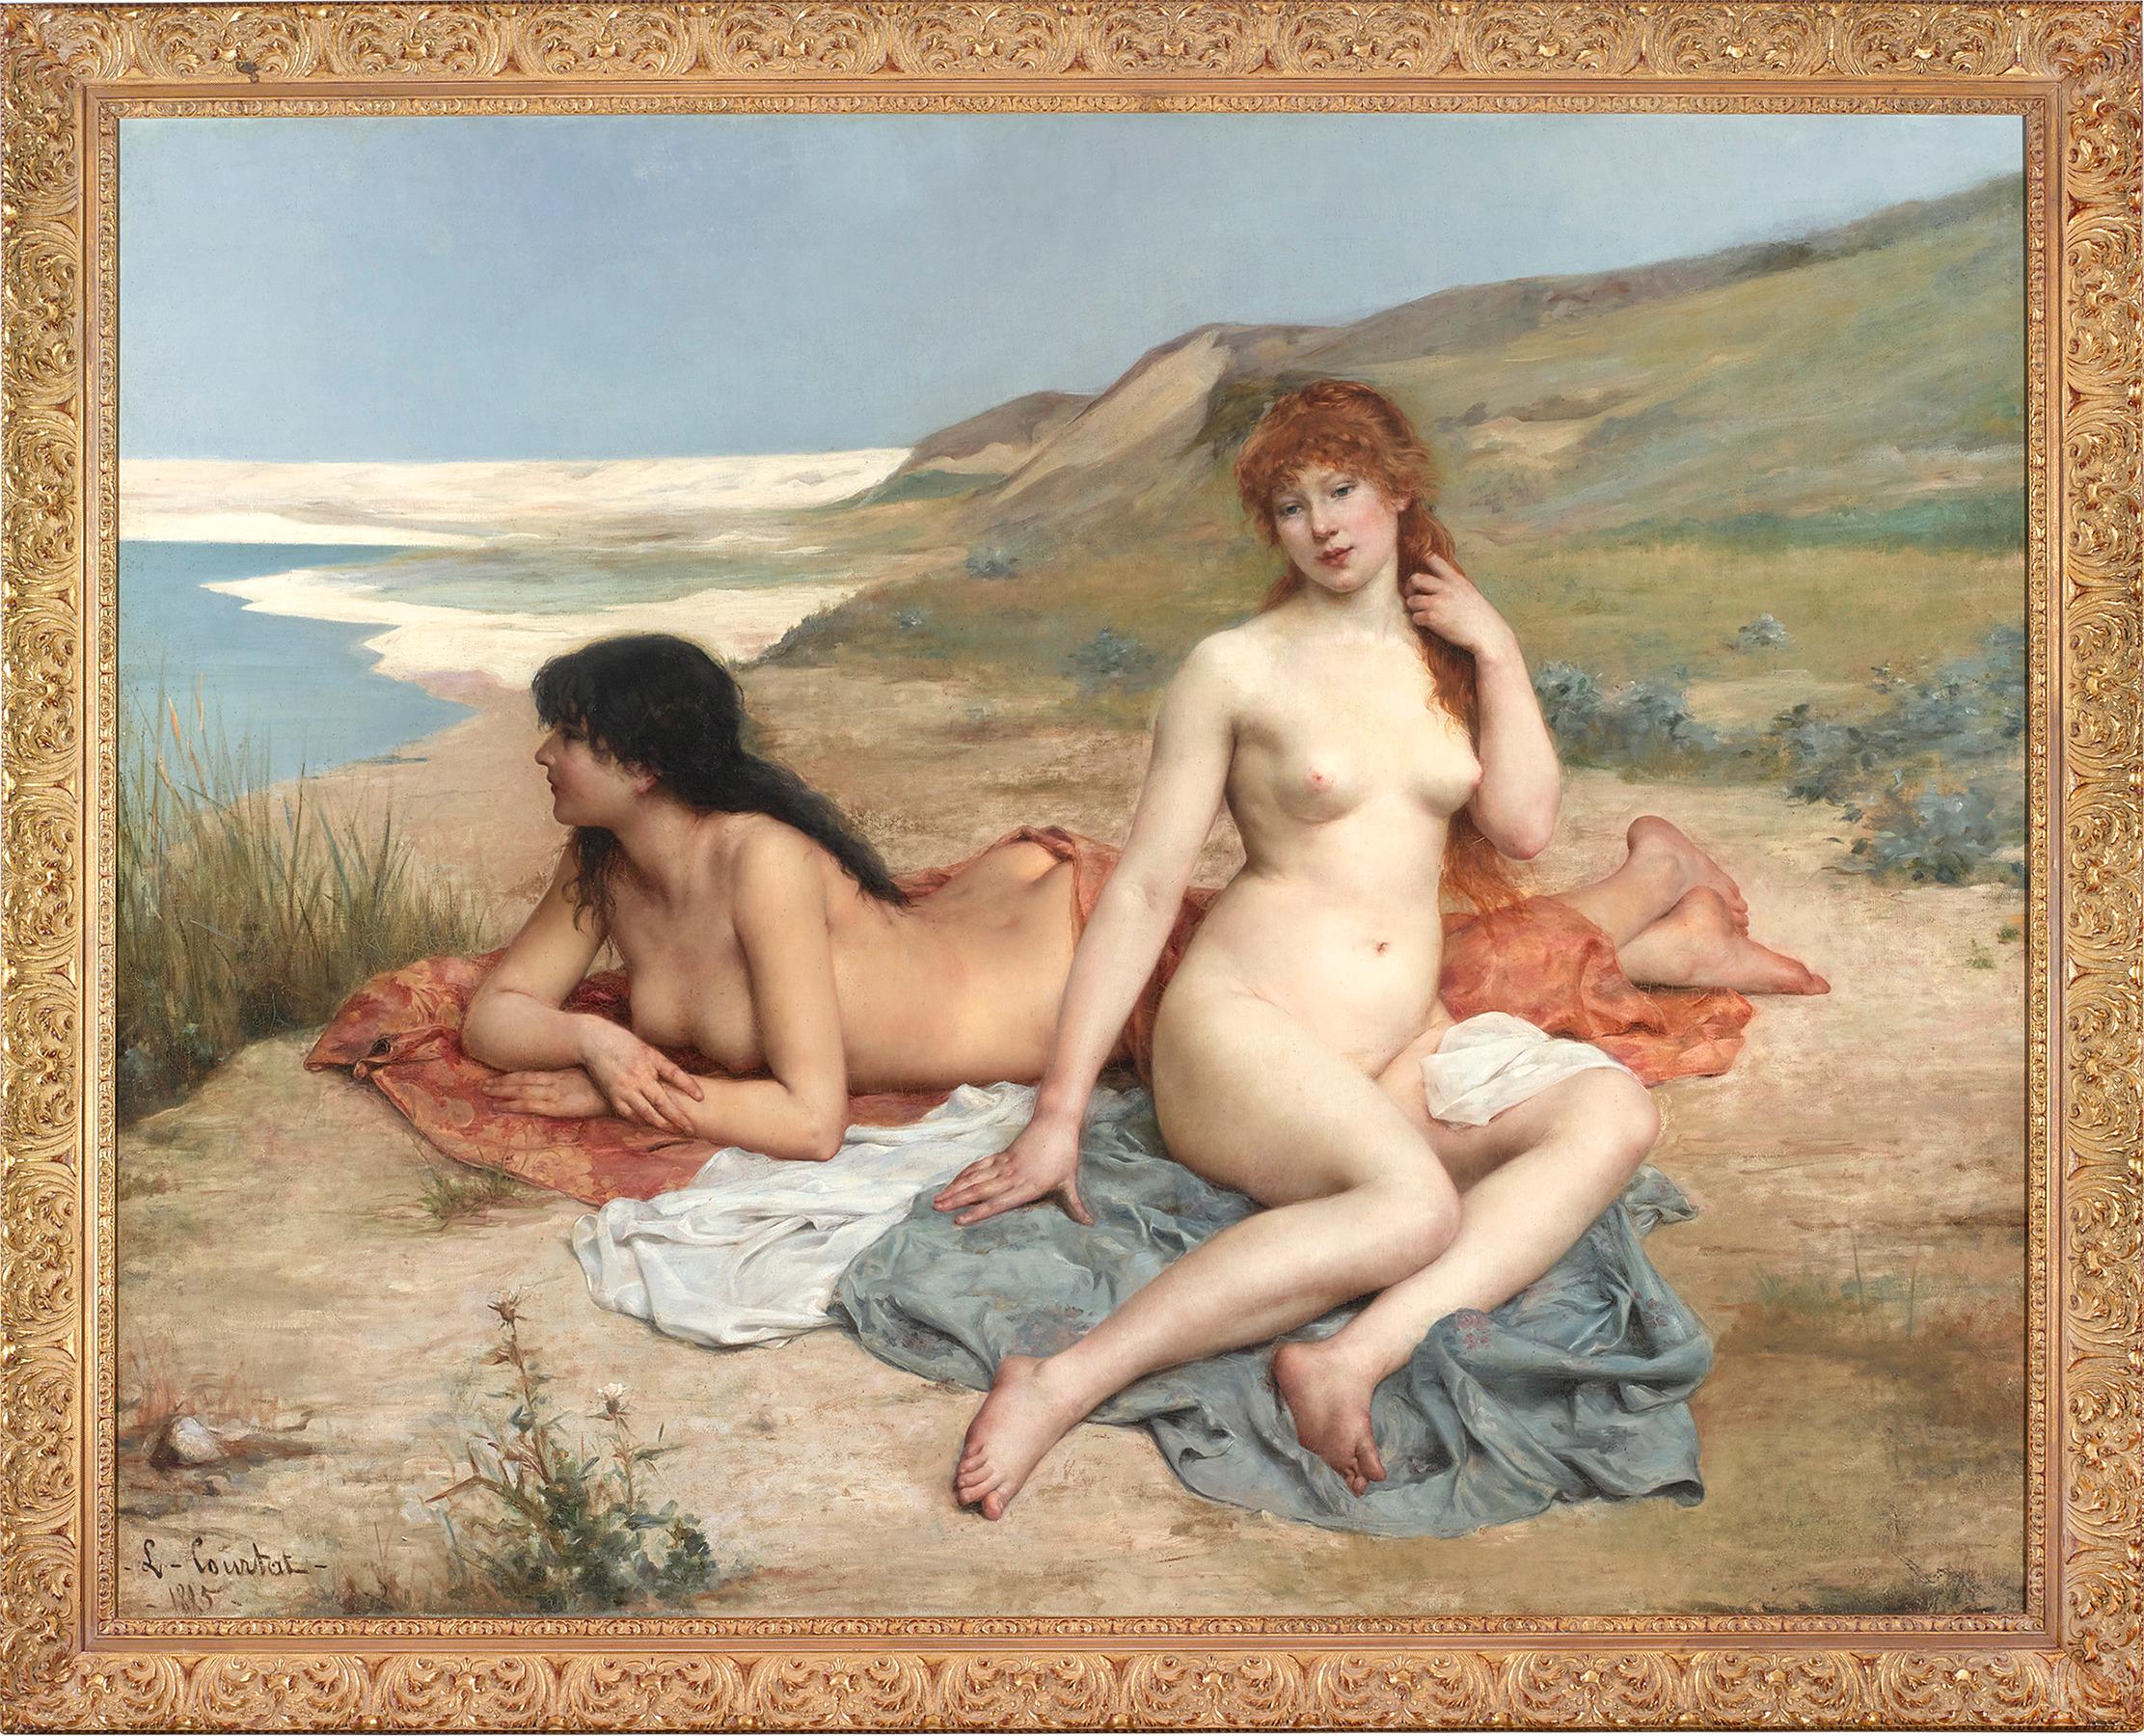 Baigneuses (Bathers) - Painting by Louis-Joseph Courtat